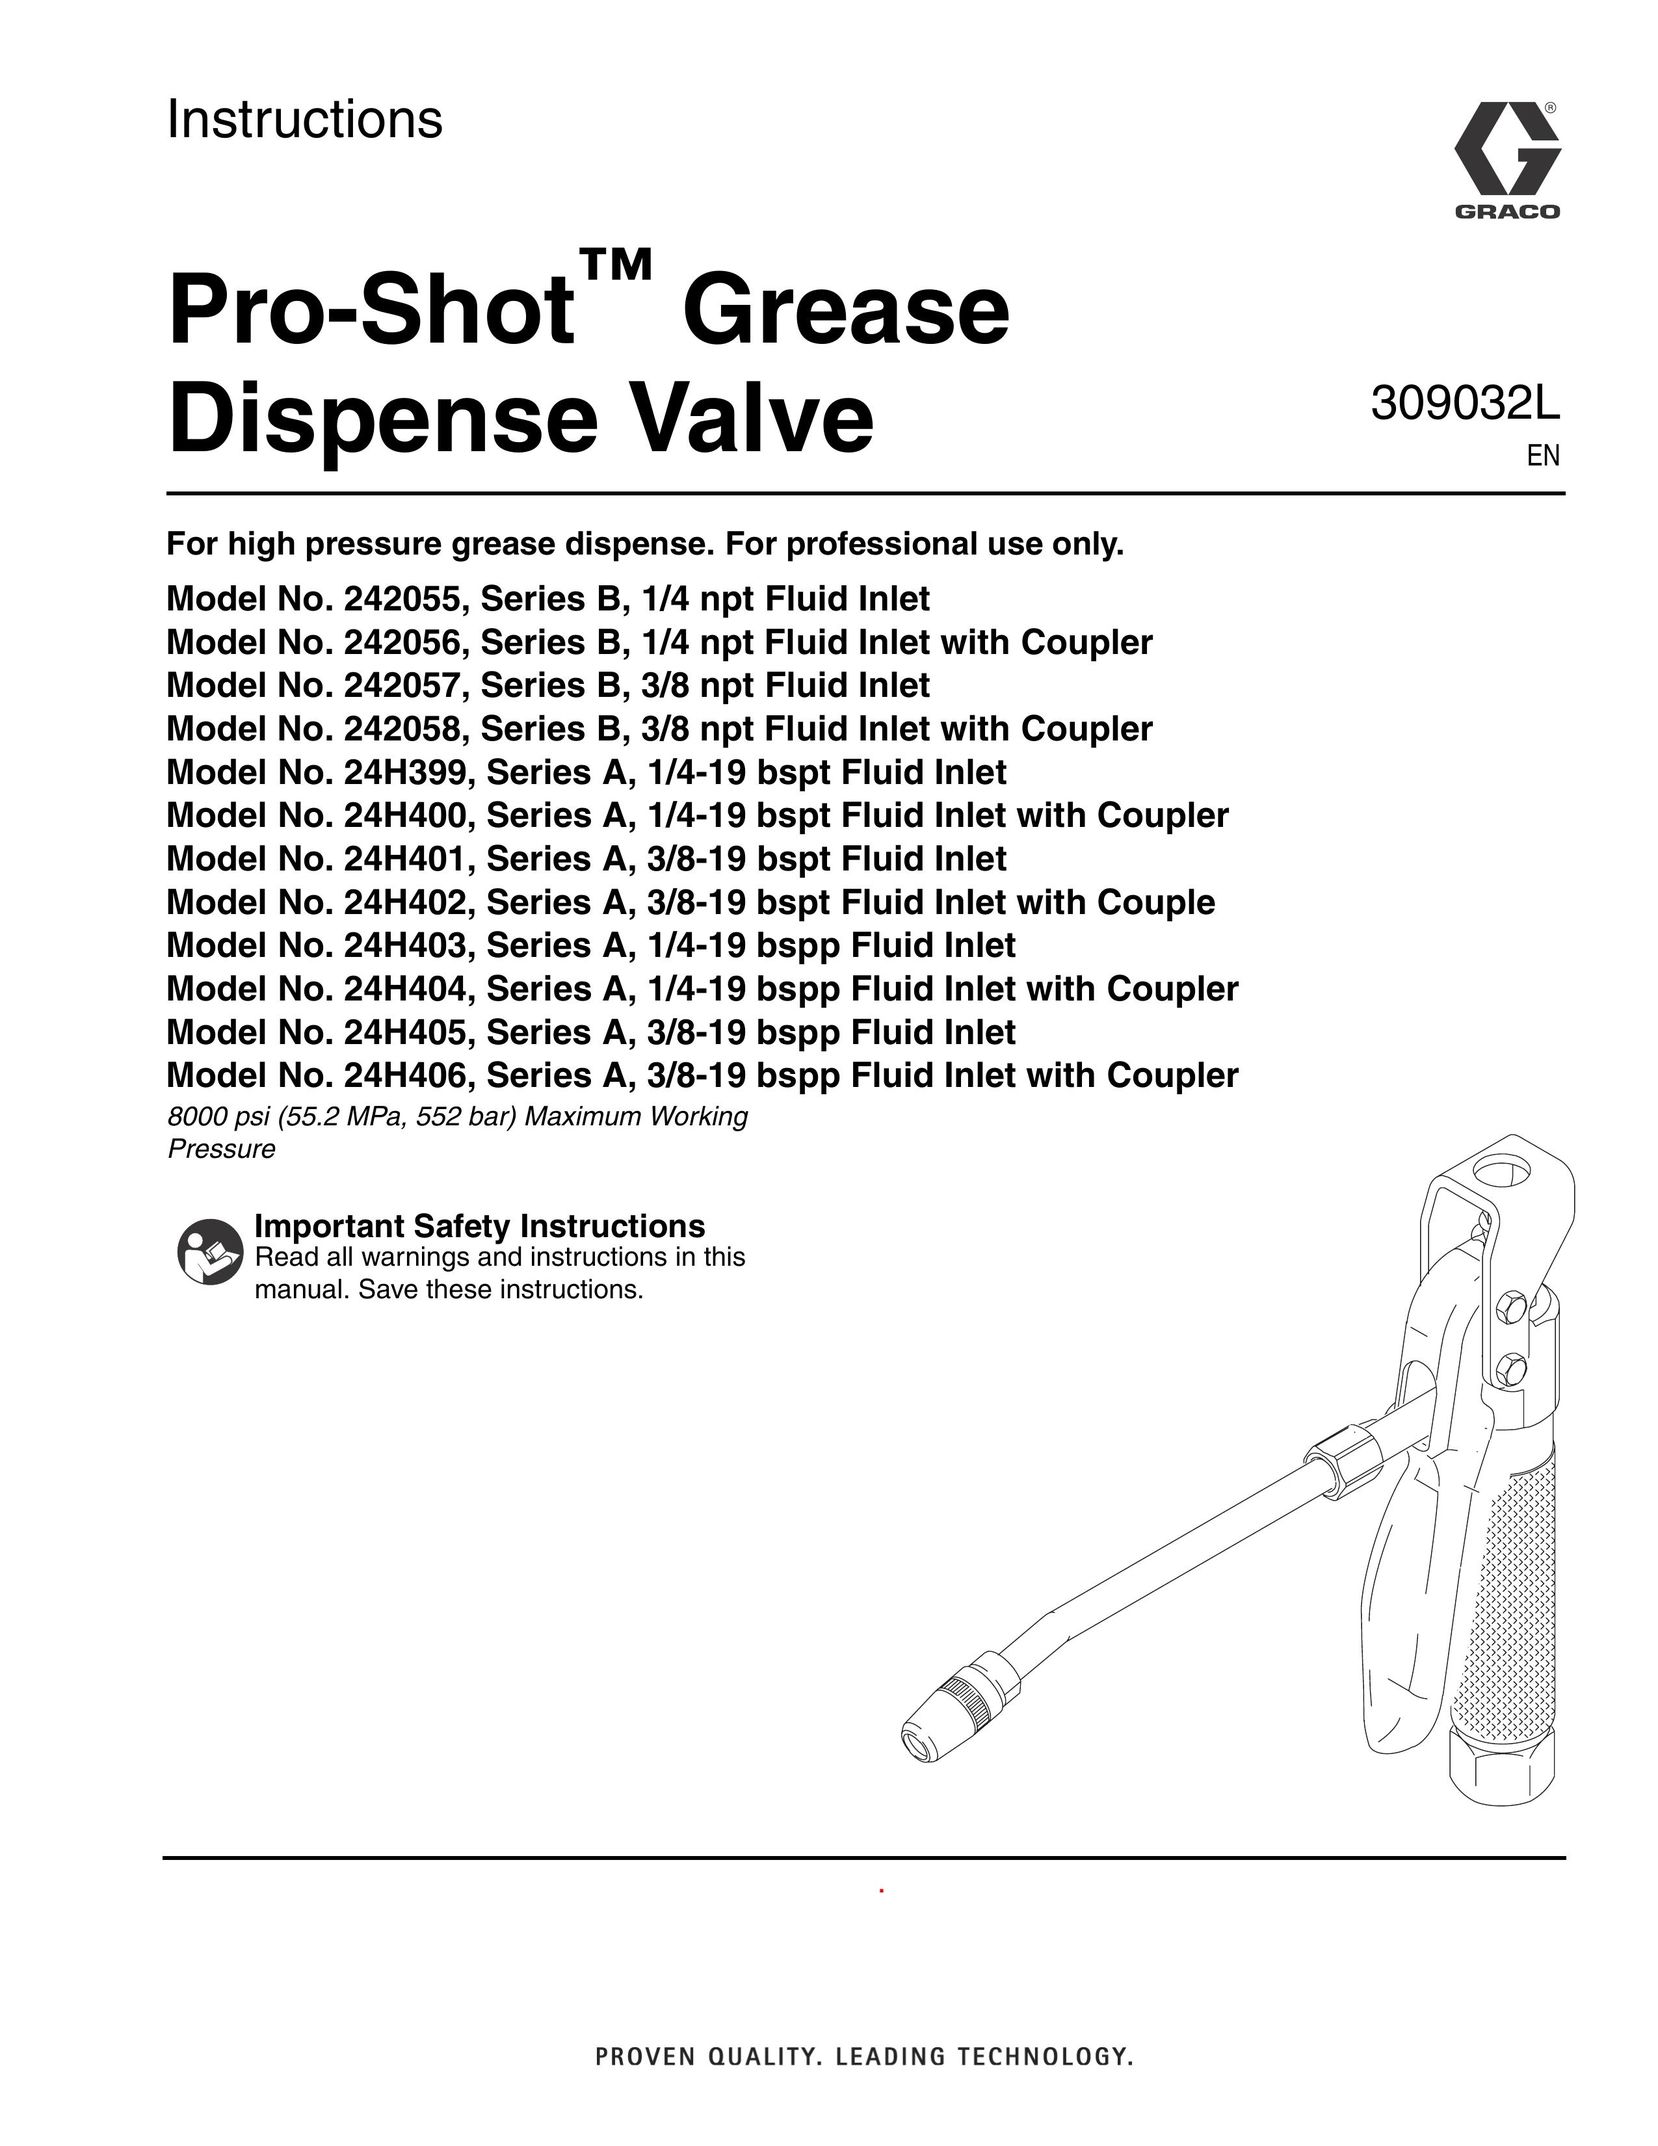 Graco 24H403 Glue Gun User Manual